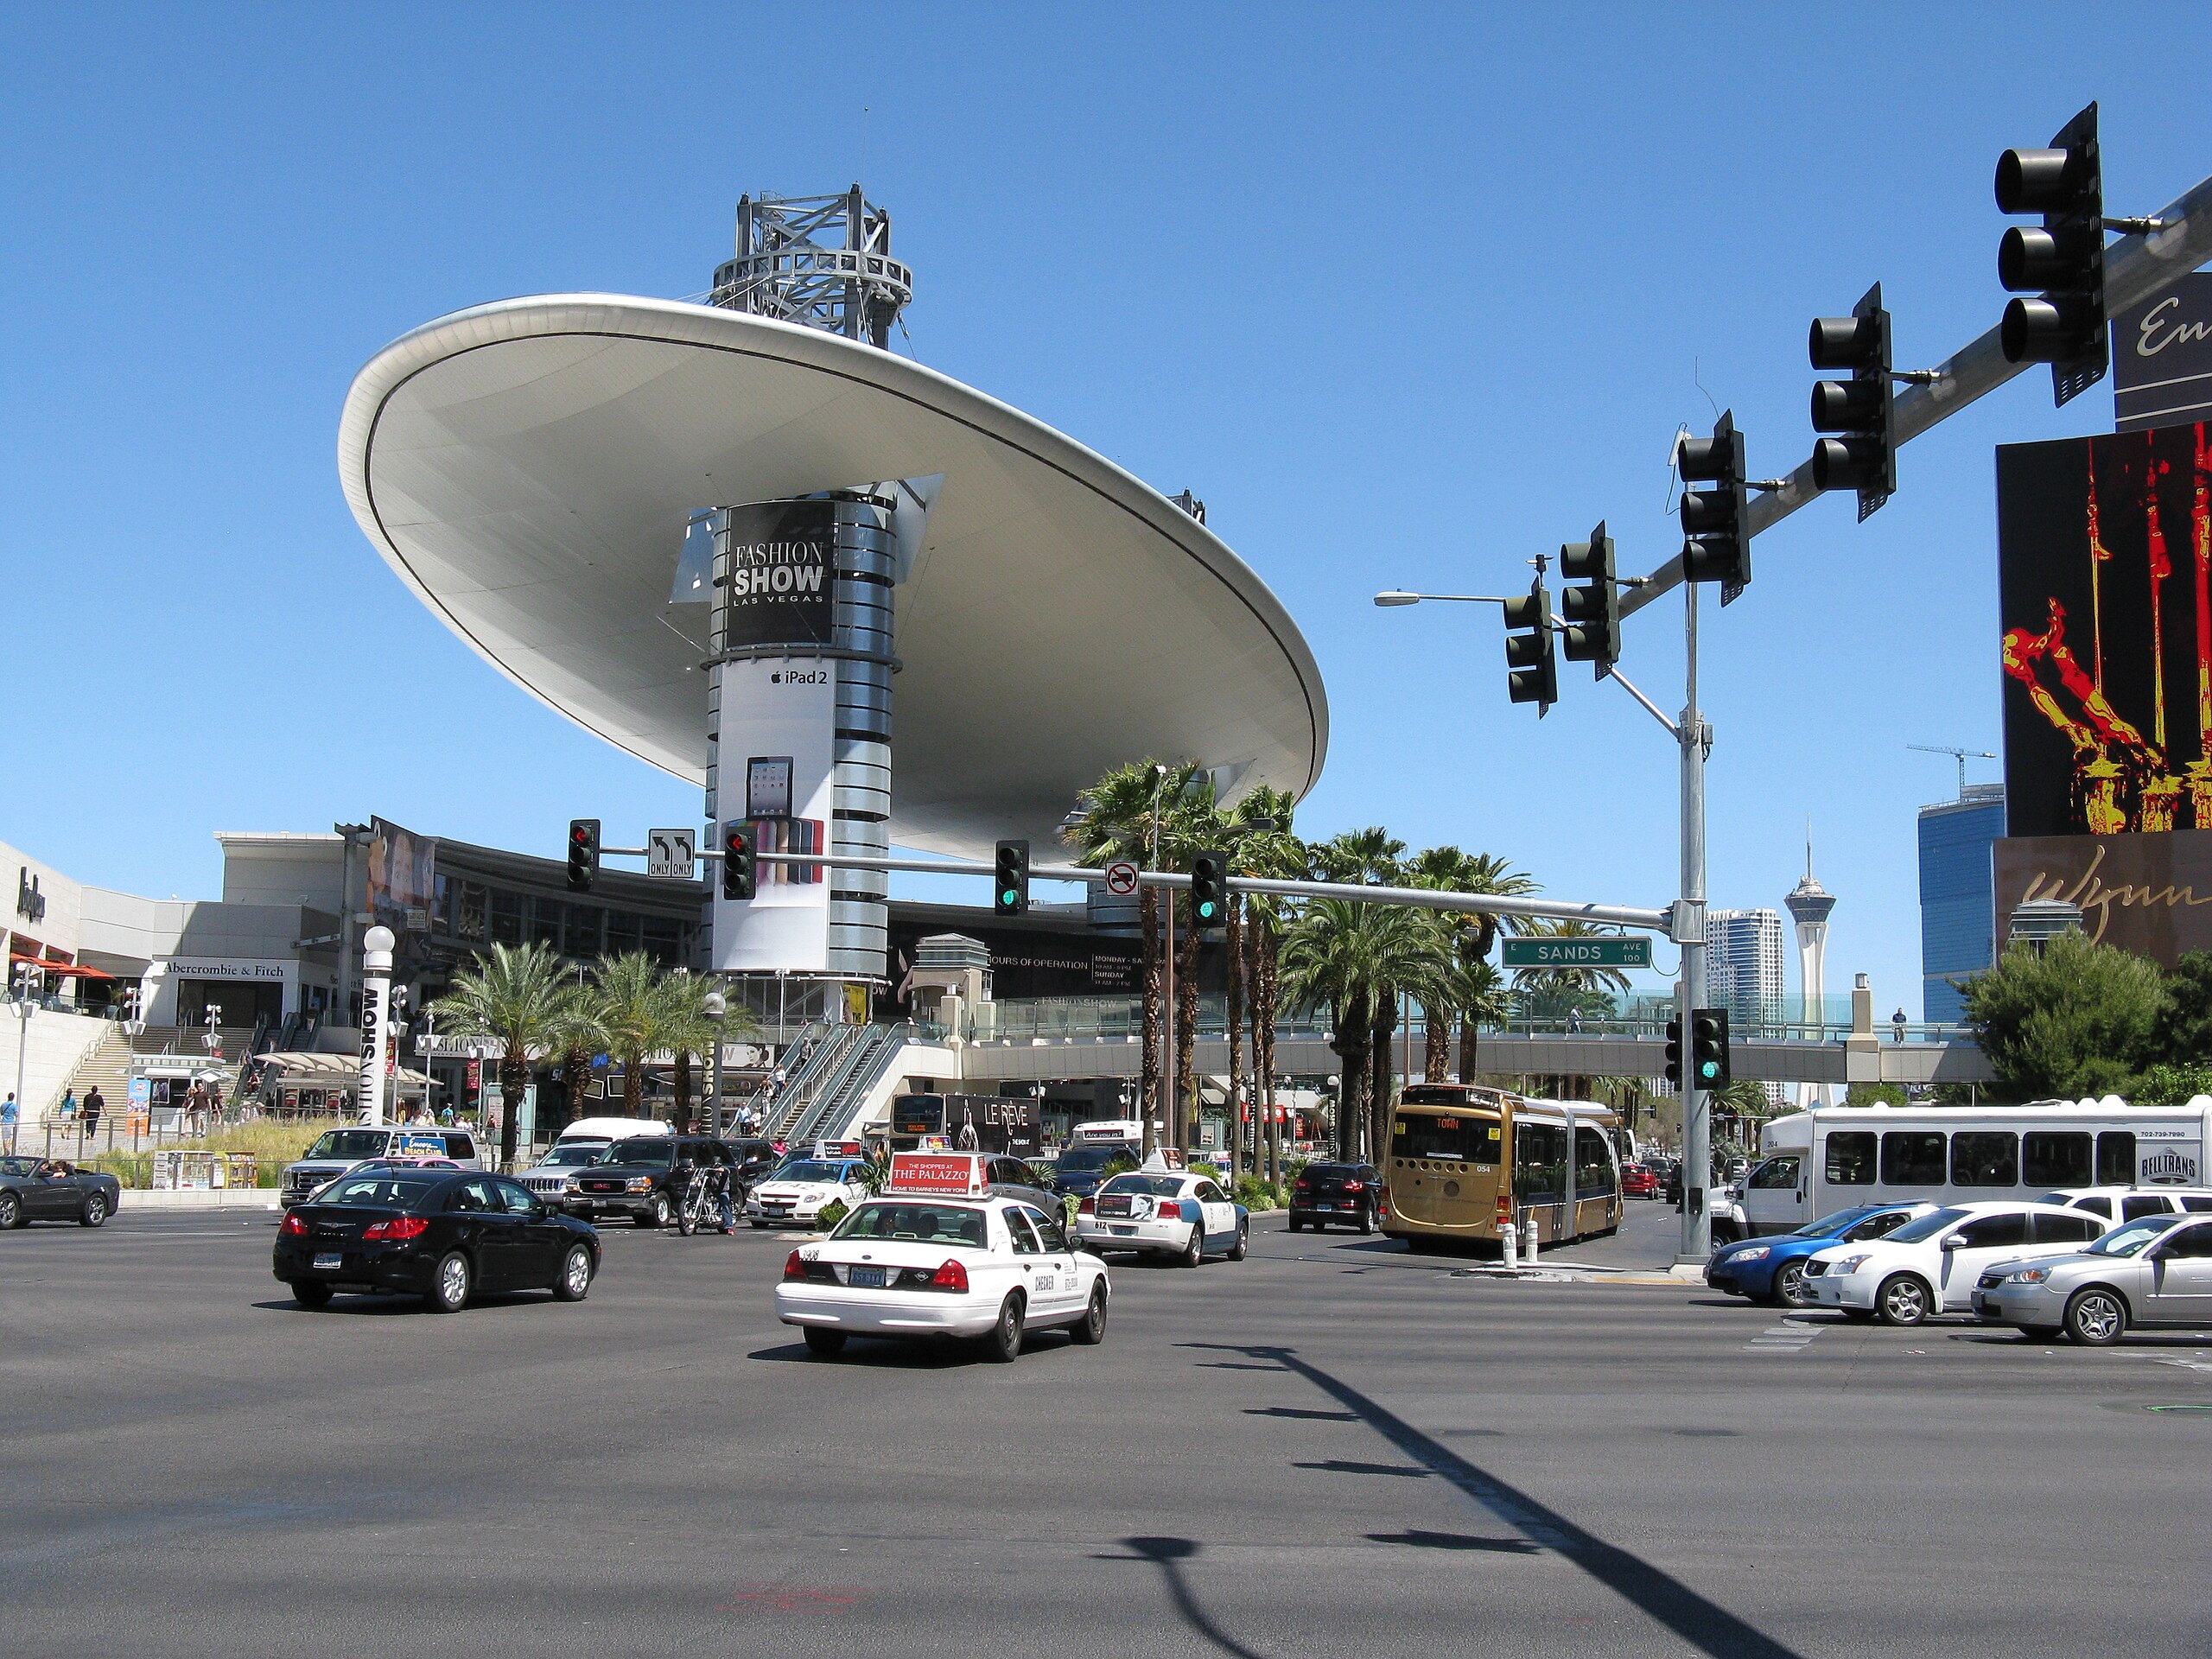 File:Fashion Show Mall Las Vegas 2019.jpg - Wikimedia Commons